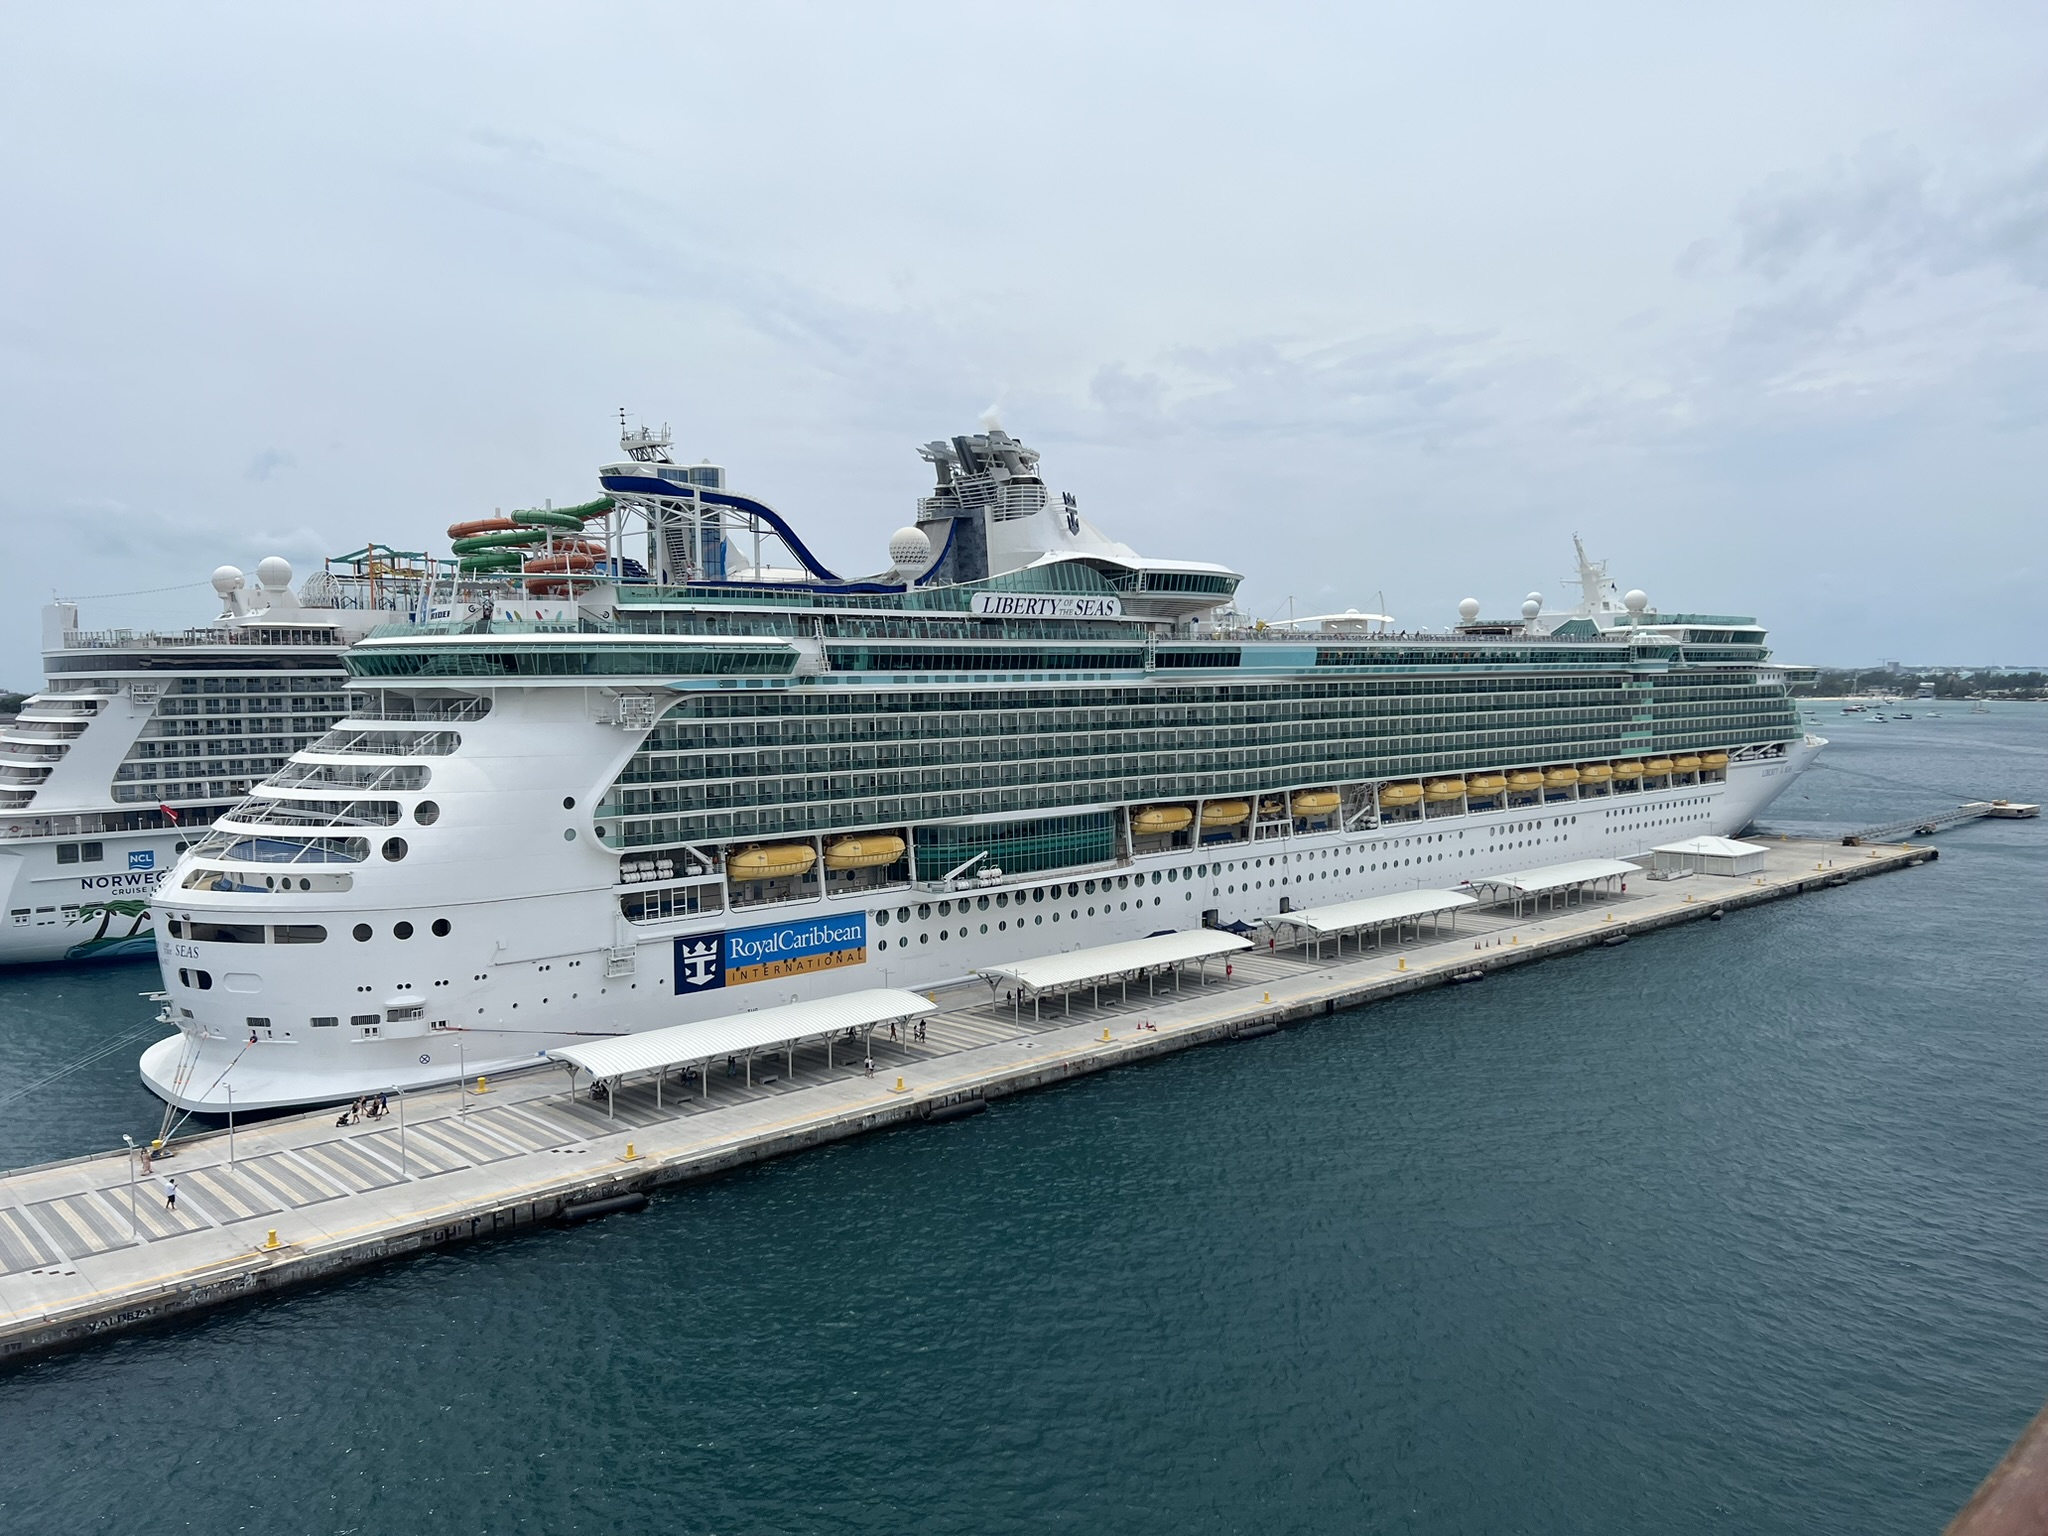 Cruise Ships - Royal Caribbean's Cruise Ship Liberty of the Seas Leaves the Port of Nassau Bahamas